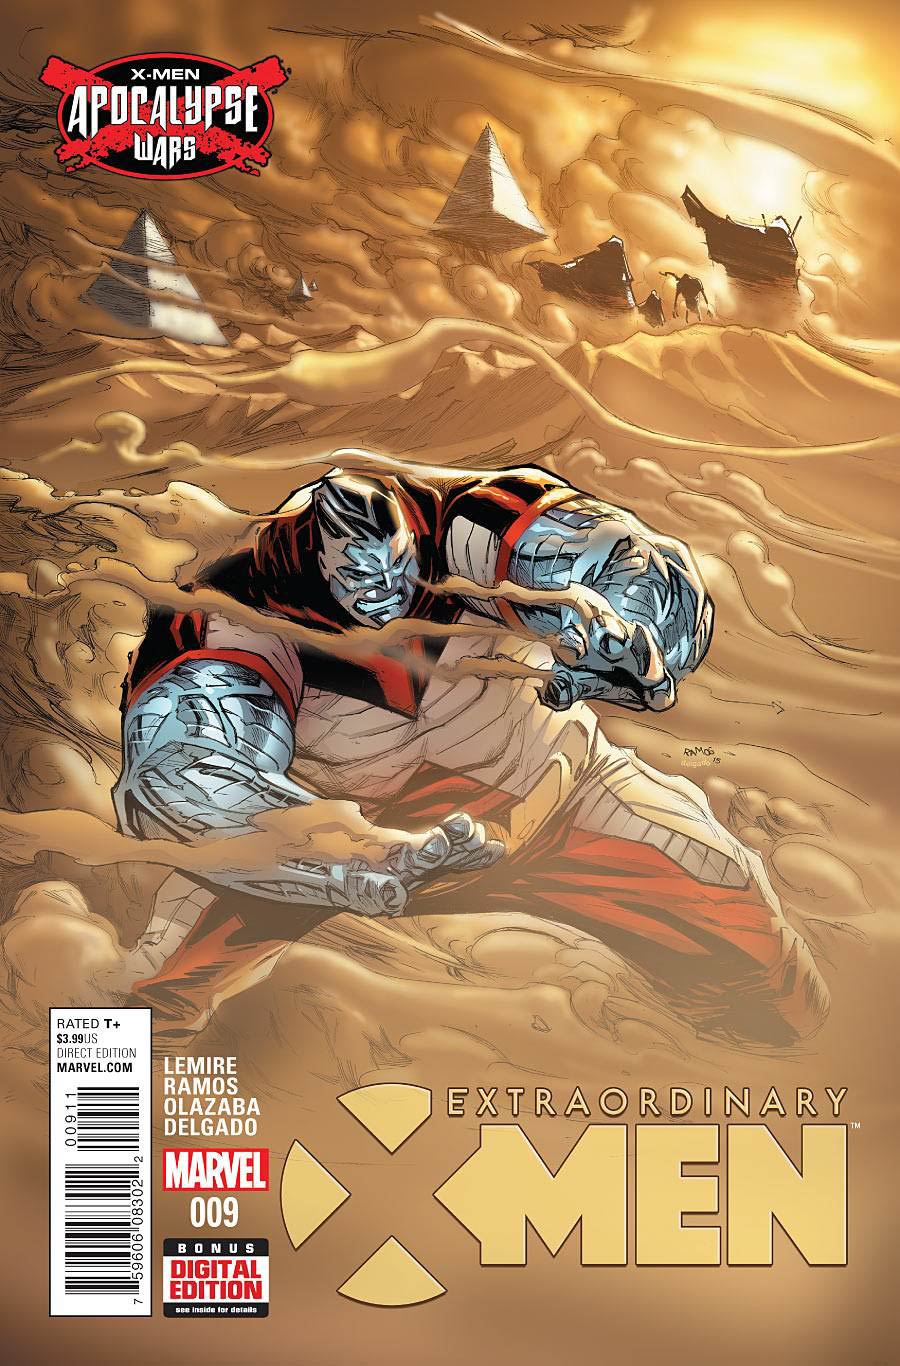 Extraordinary X-Men #9 Cover A Regular Humberto Ramos Cover (X-Men Apocalypse Wars Tie-In)